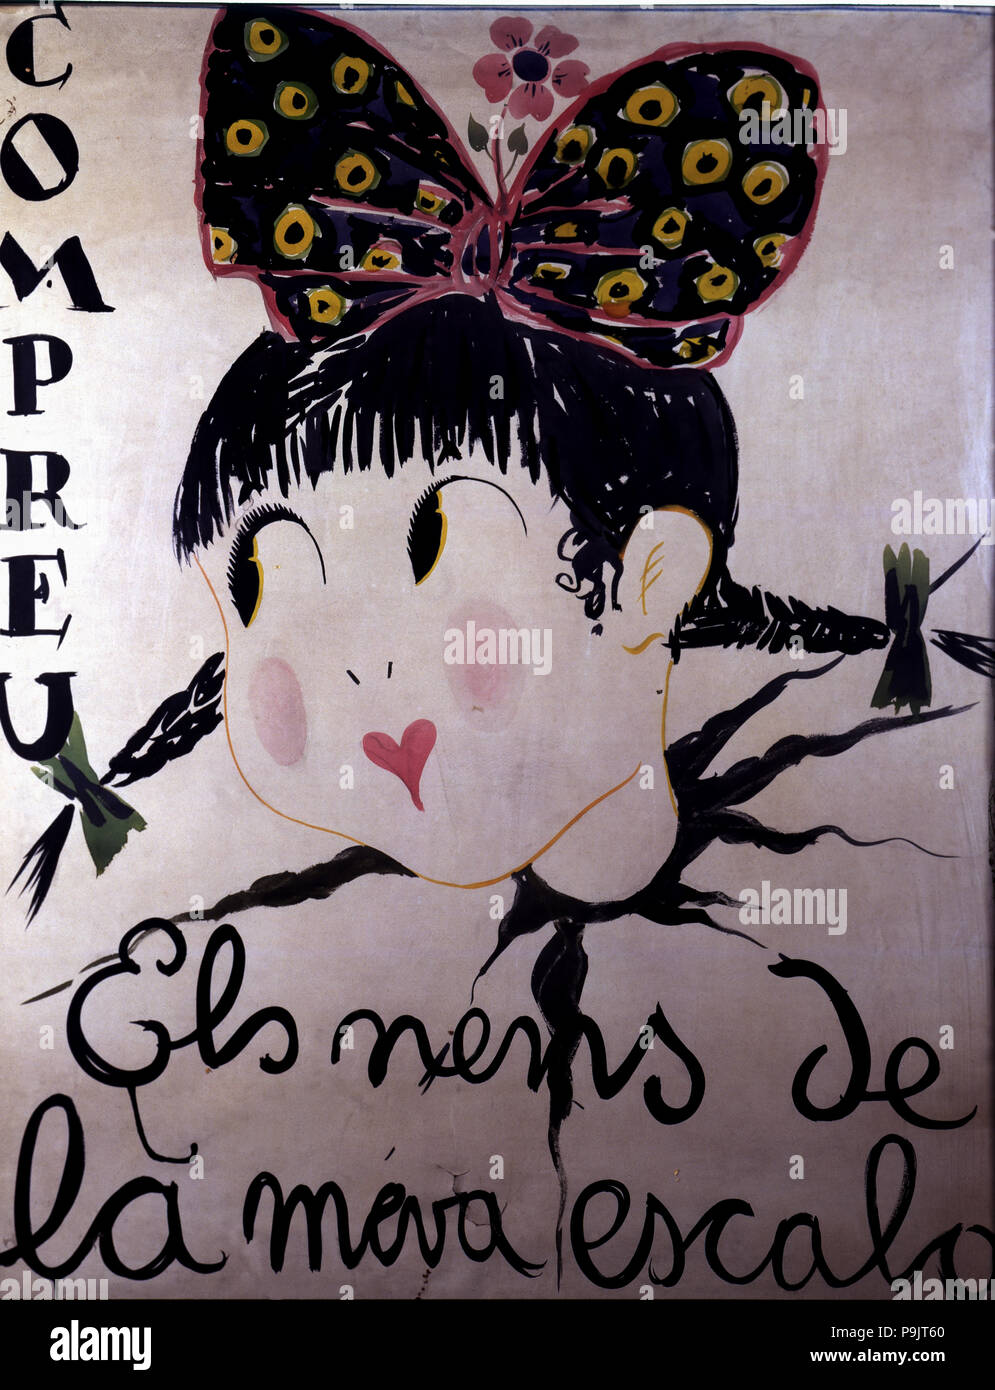 Poster for the promotion of the book of J. Salvat-Papasseit 'Els nens de la meva escala' (Childre… Stock Photo